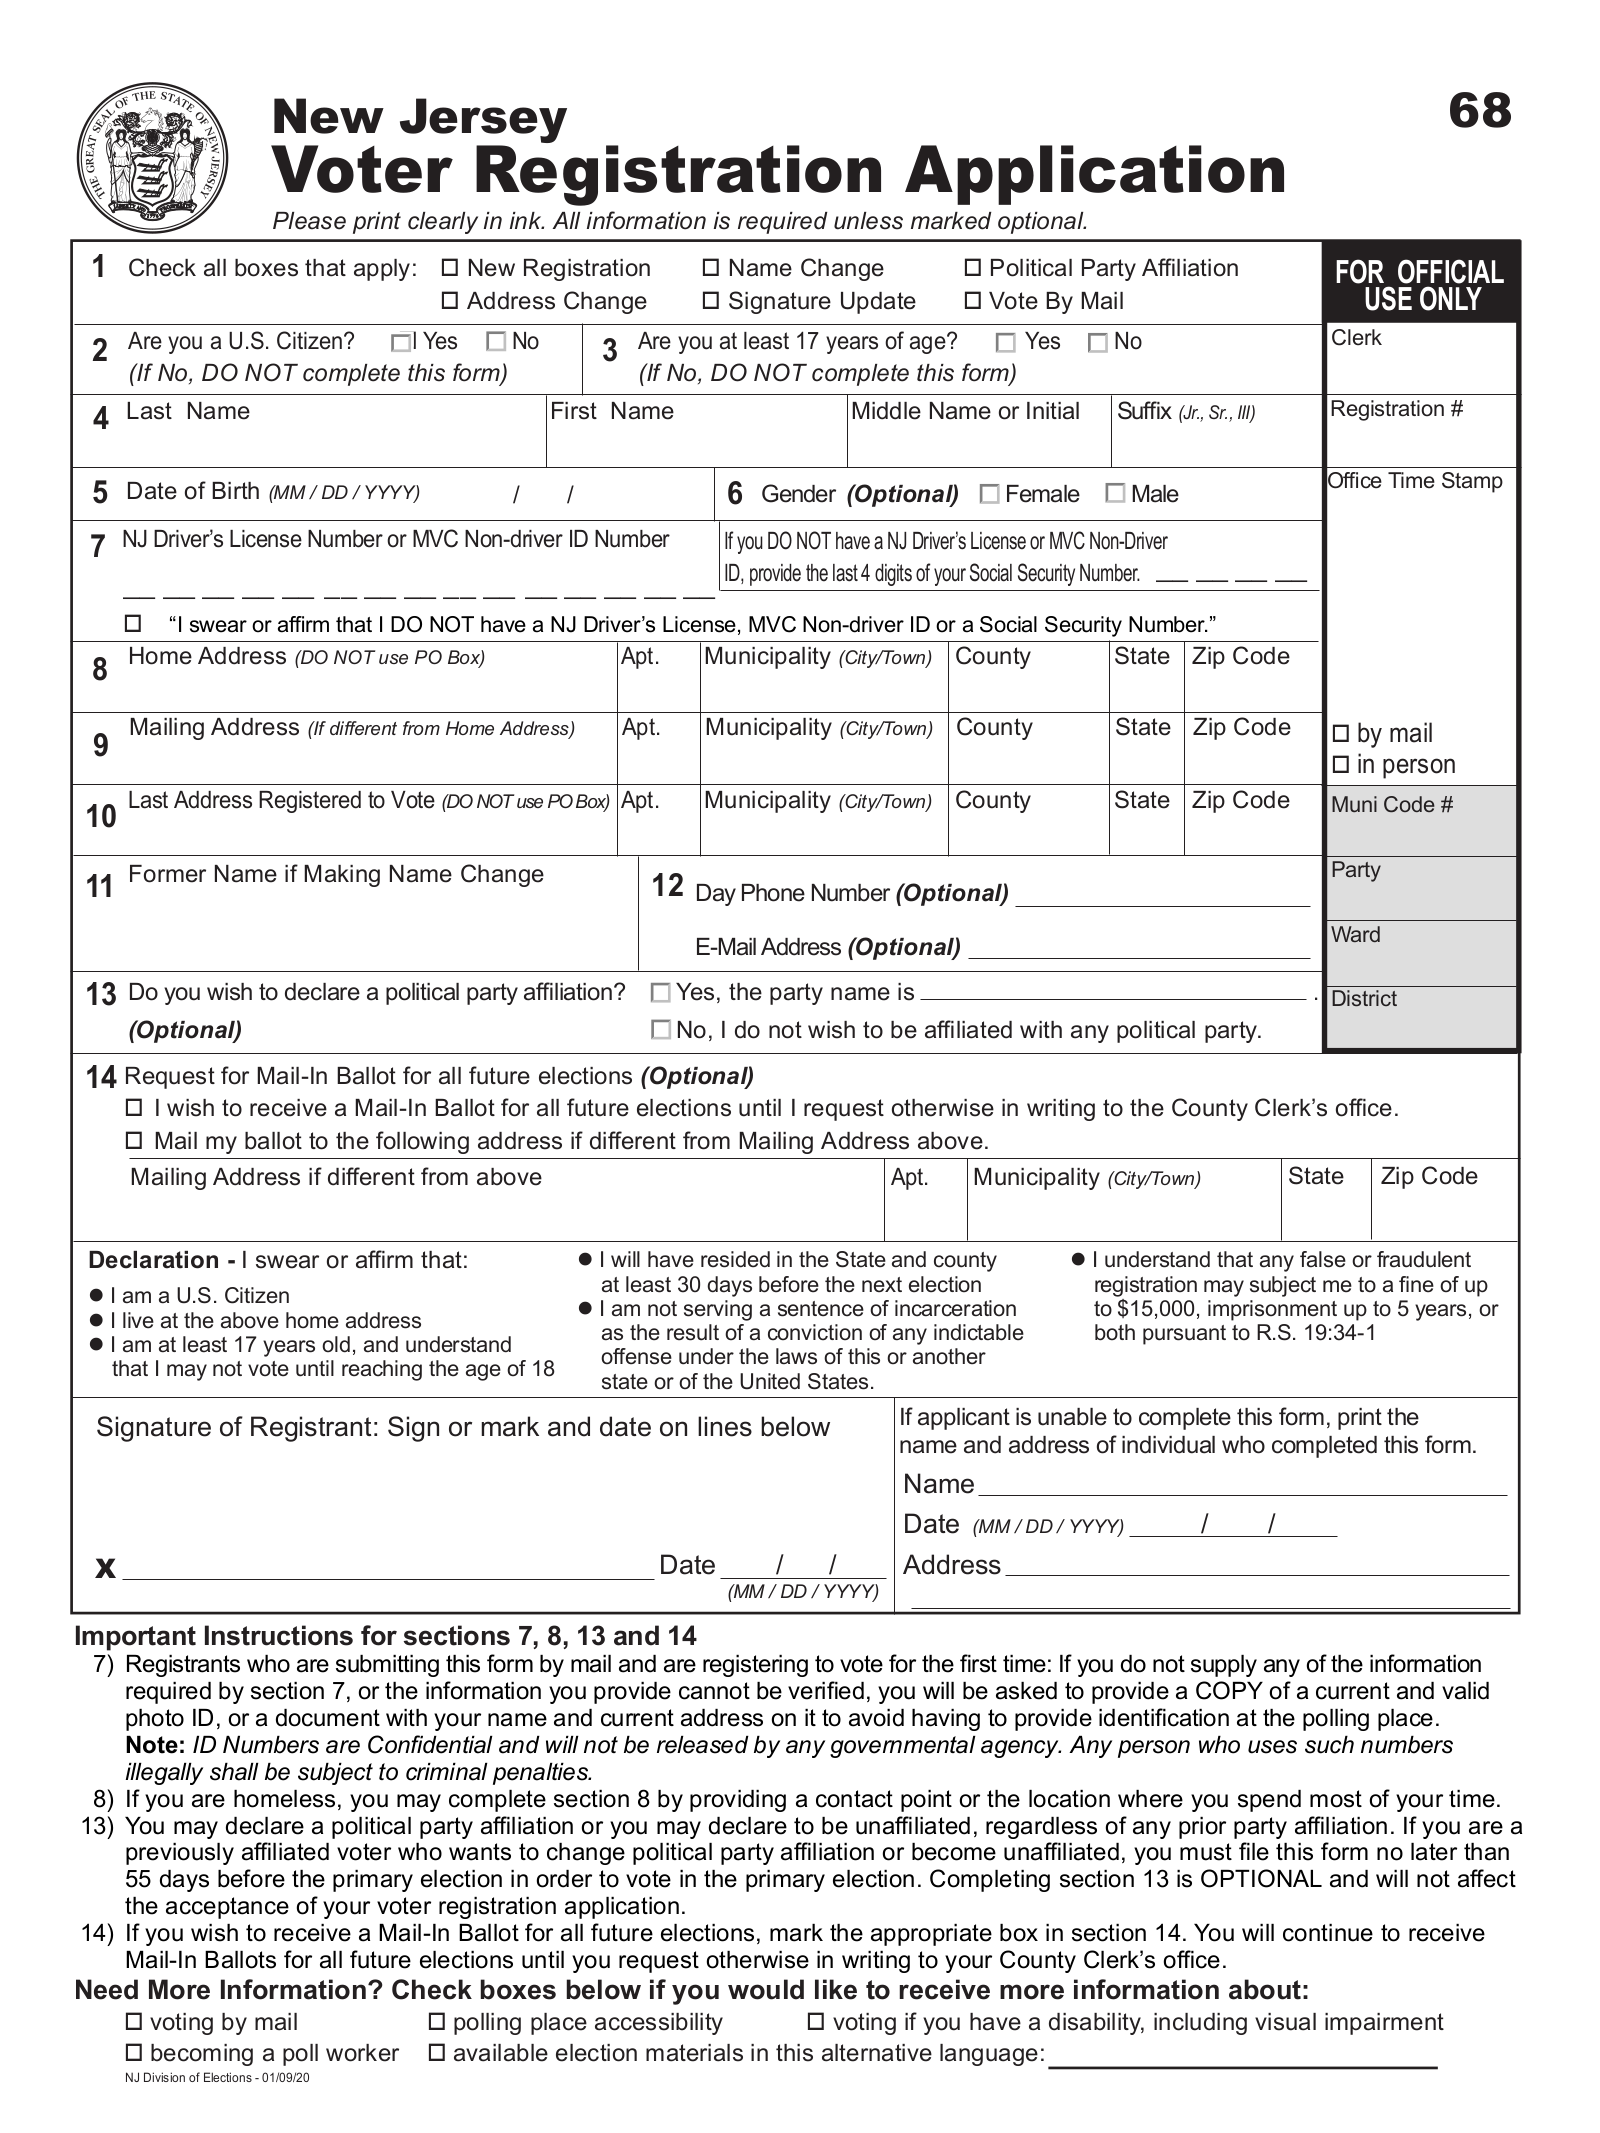 Free New Jersey Voter Registration Form – Register to Vote in NJ